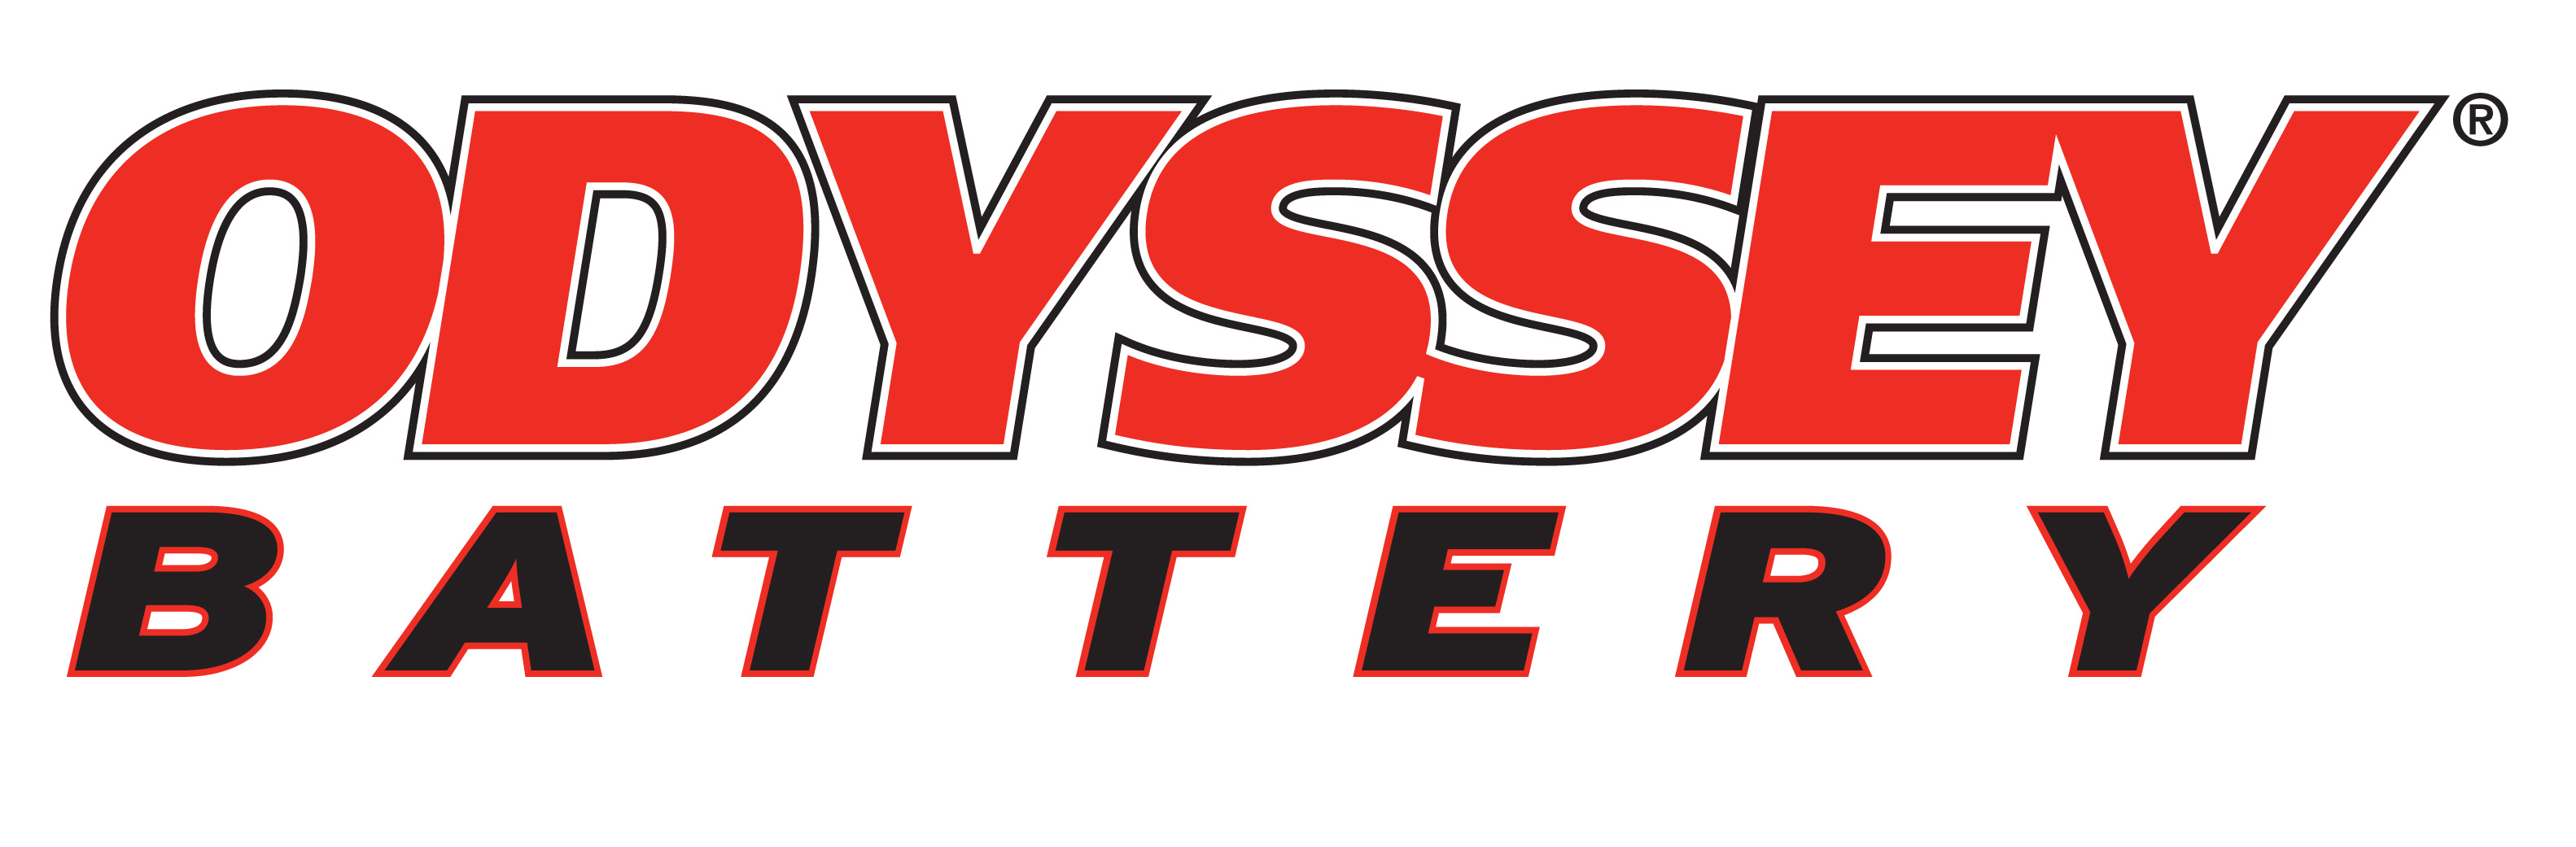 EnerSys/Odyssey Battery